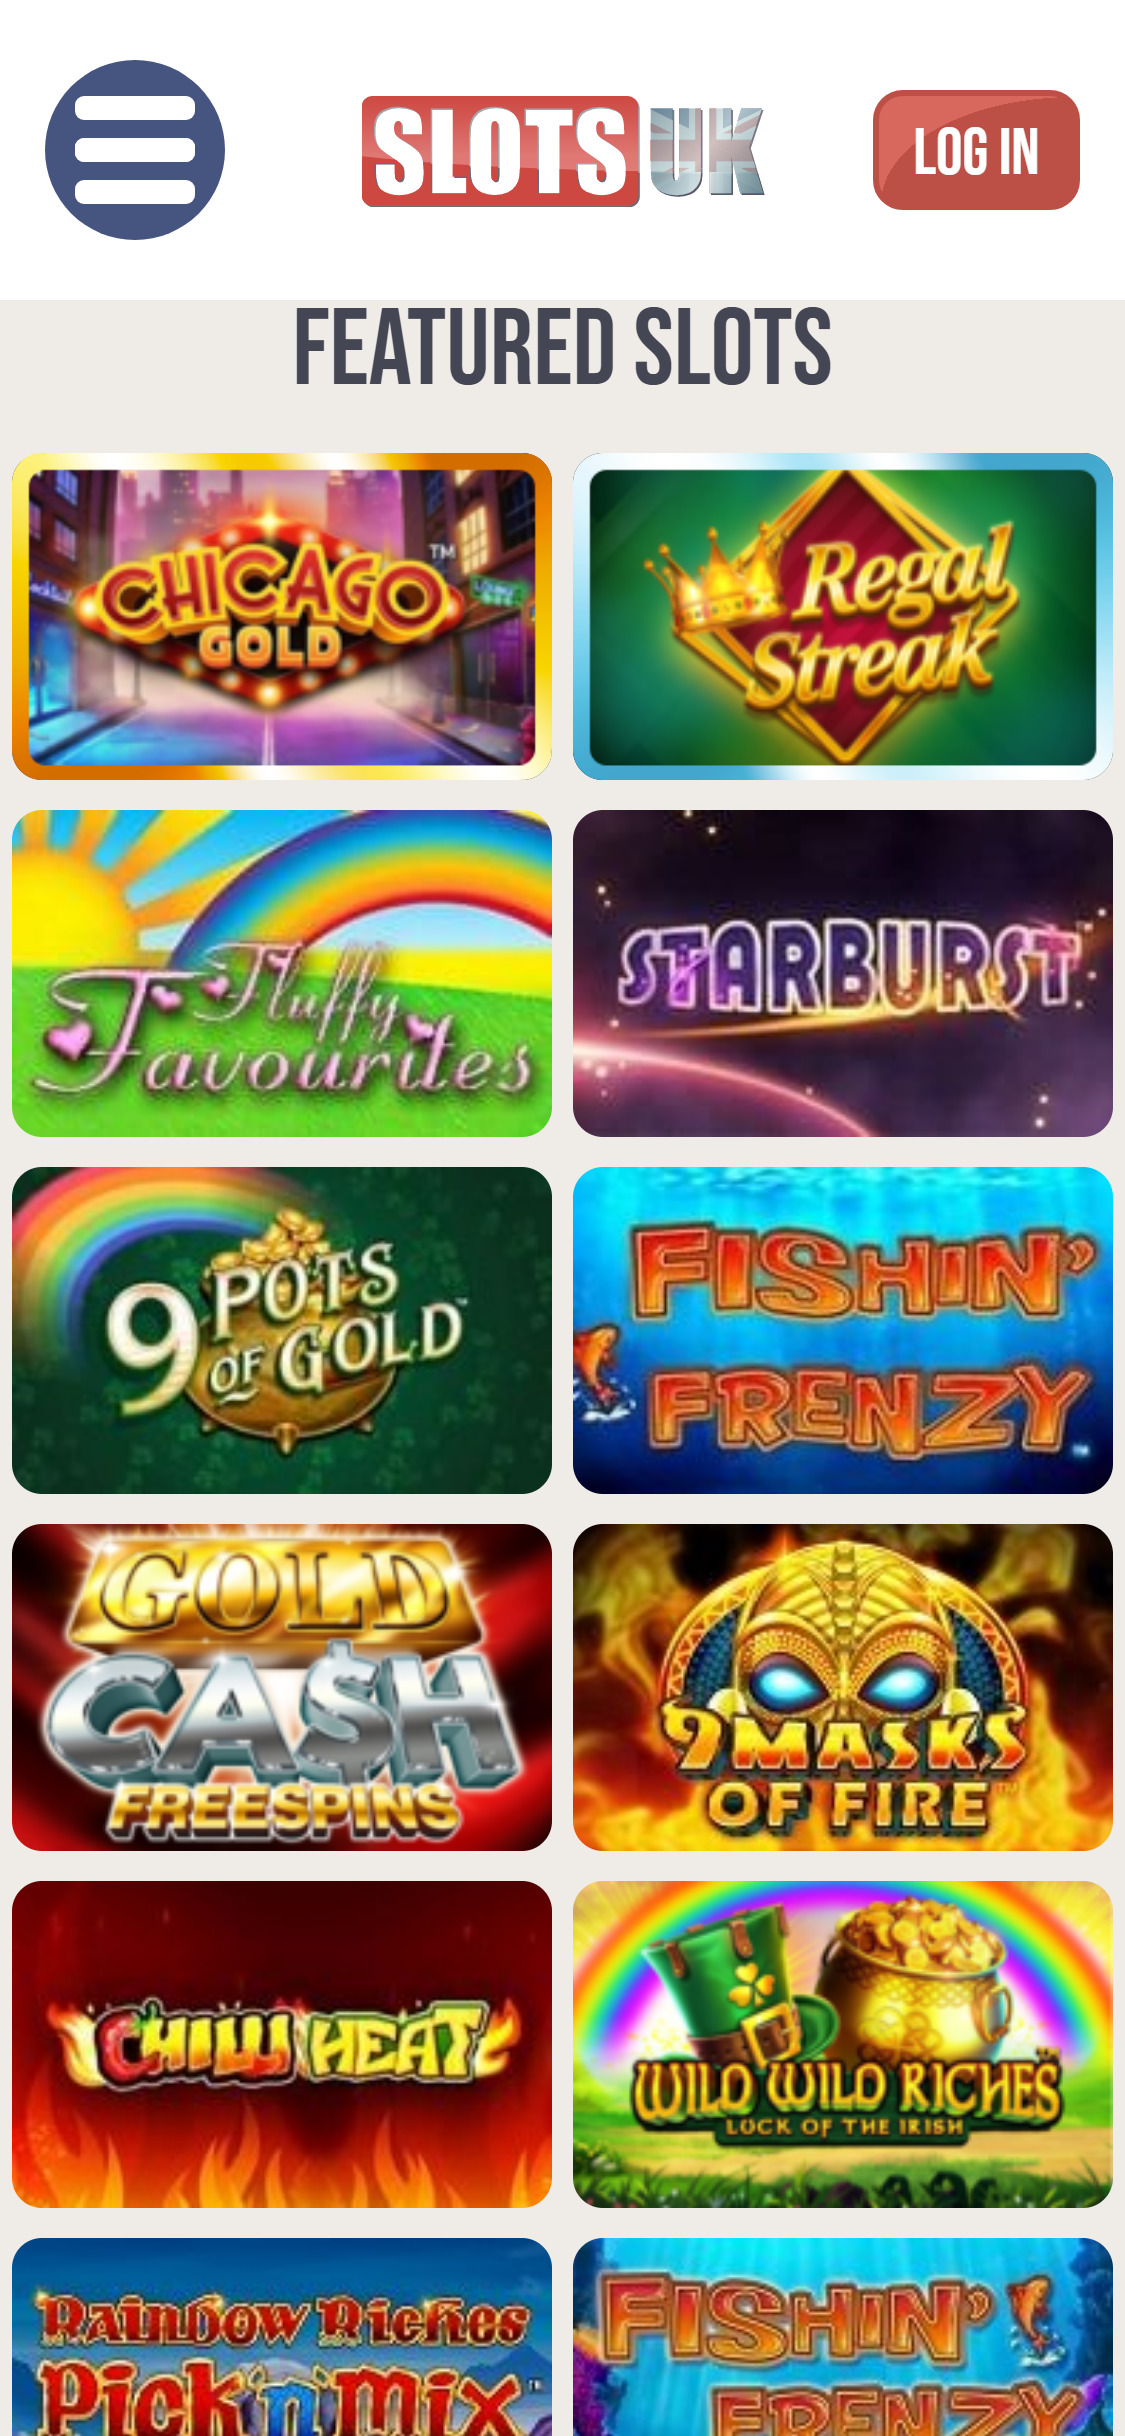 Slots UK Casino Mobile Games Review